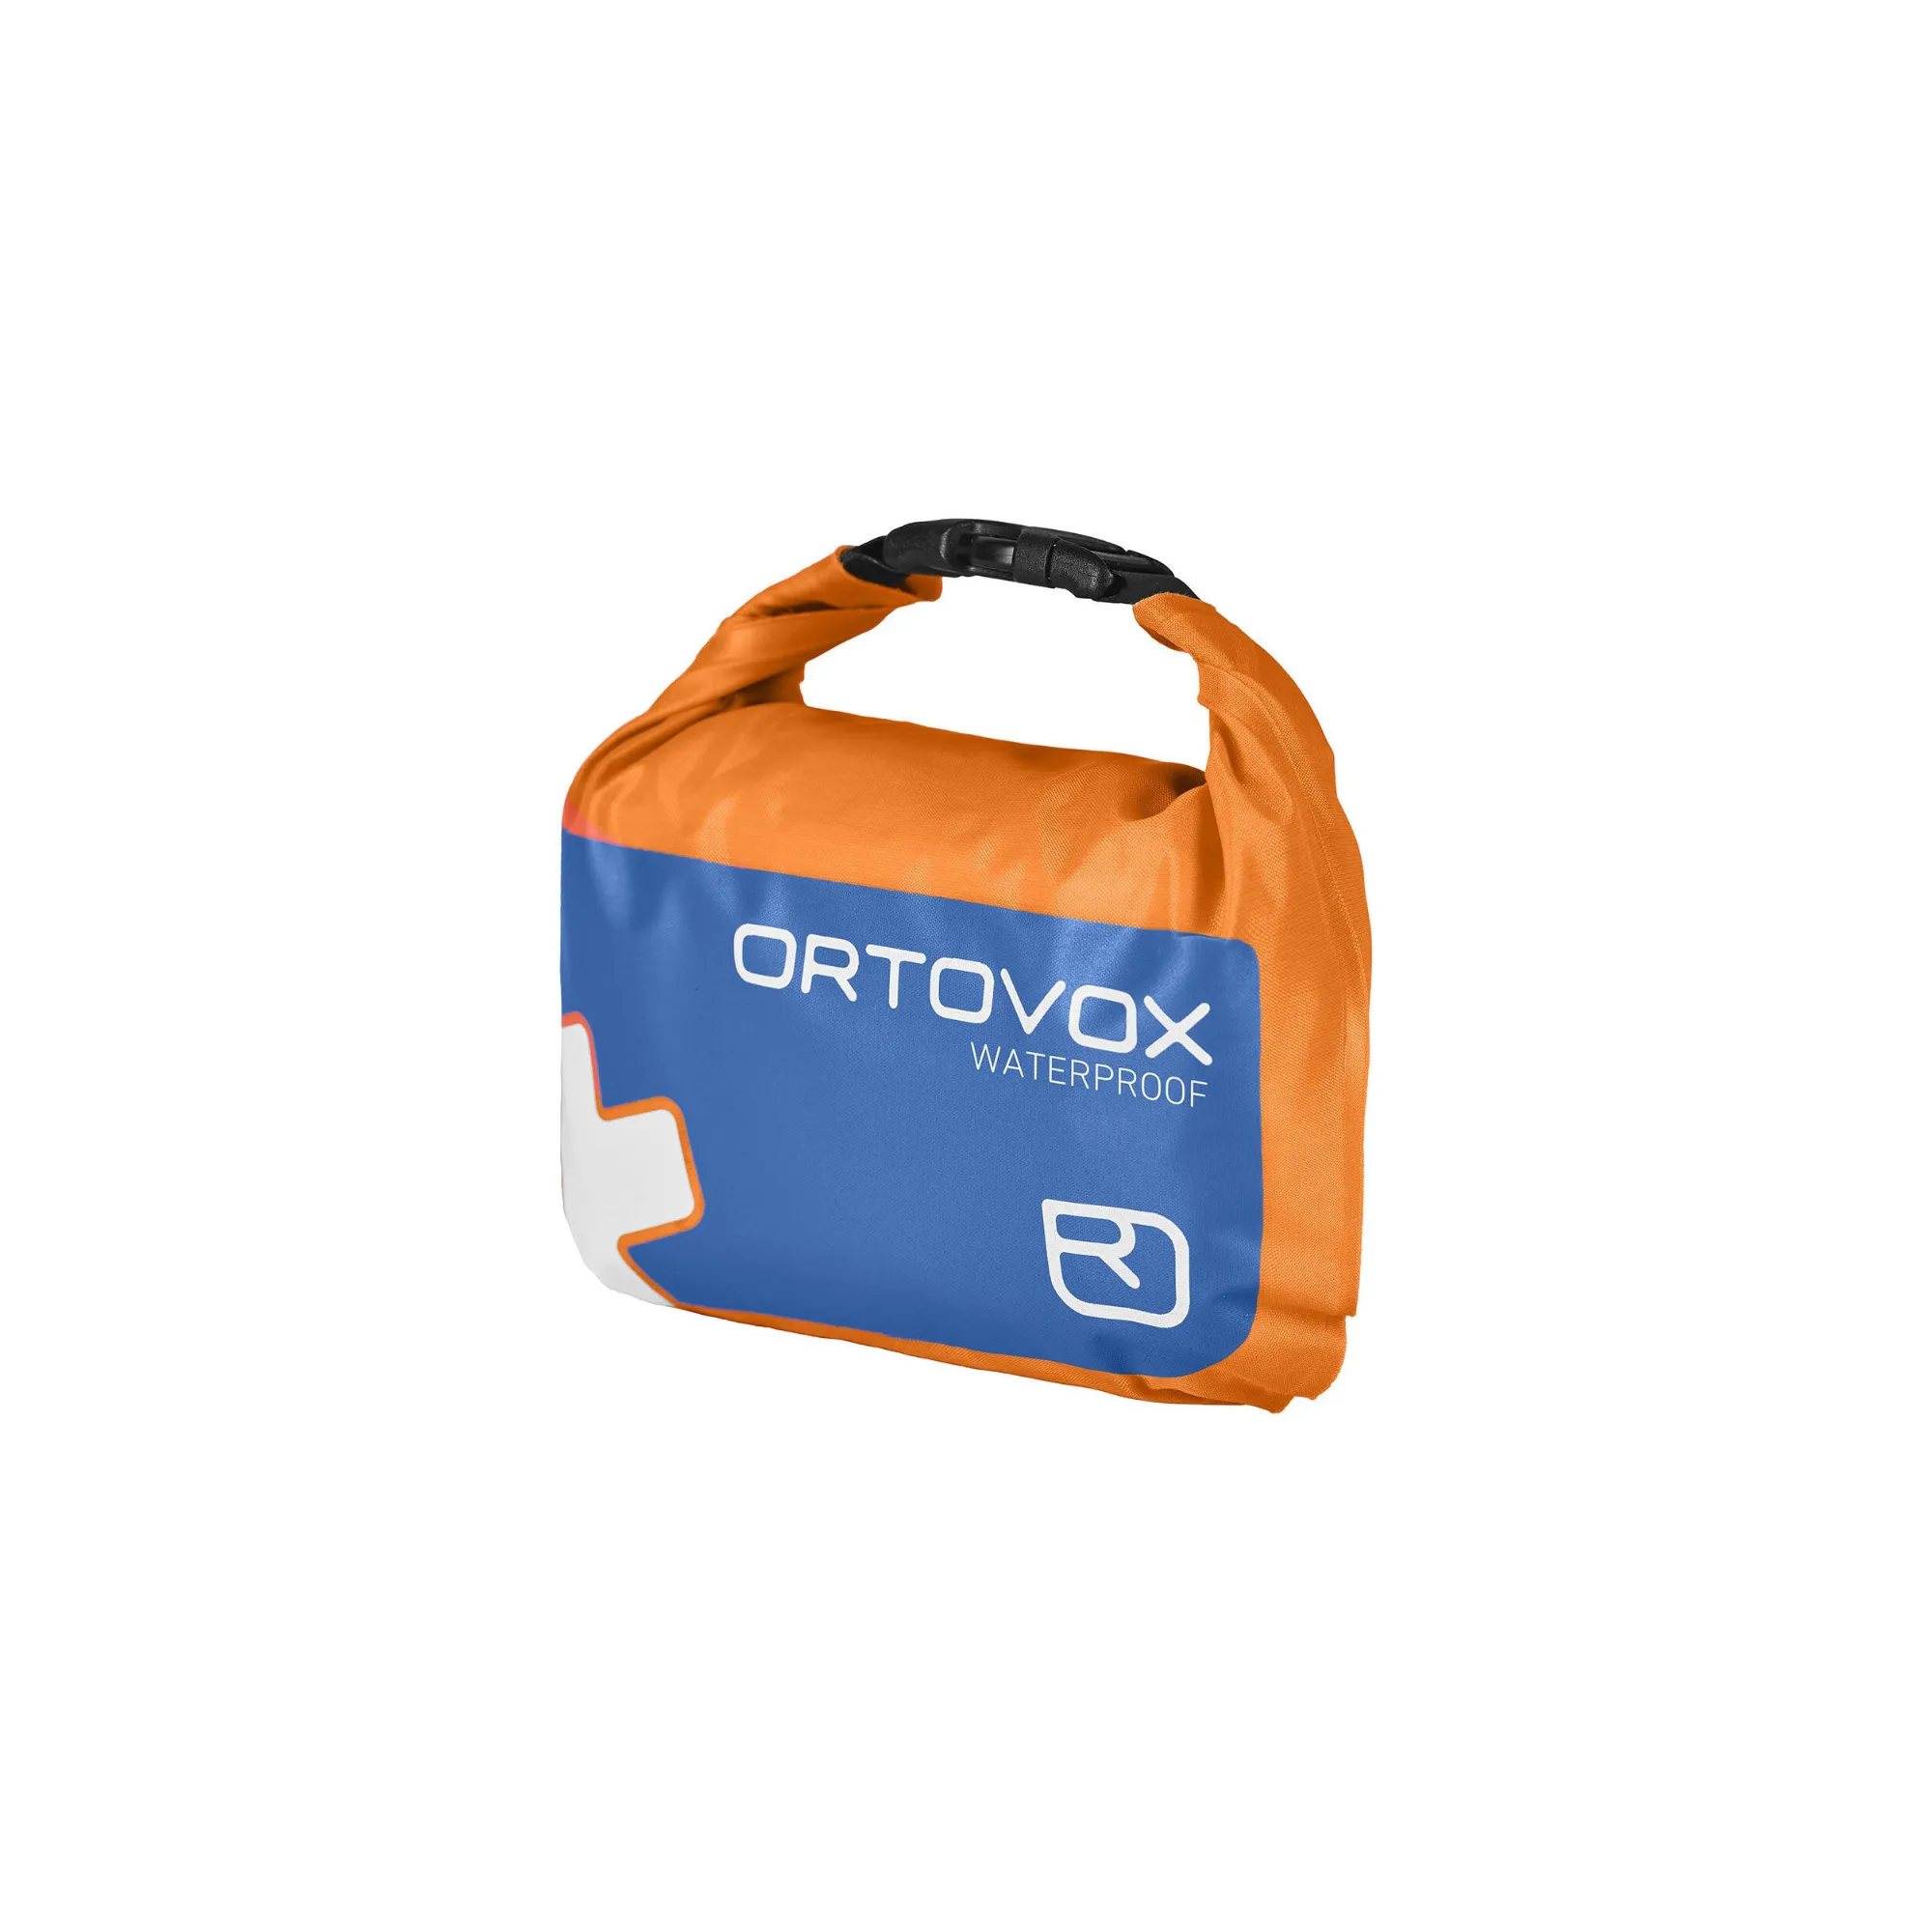 Ortovox First Aid Waterproof Bergsportzubehör + Camping orange NEU